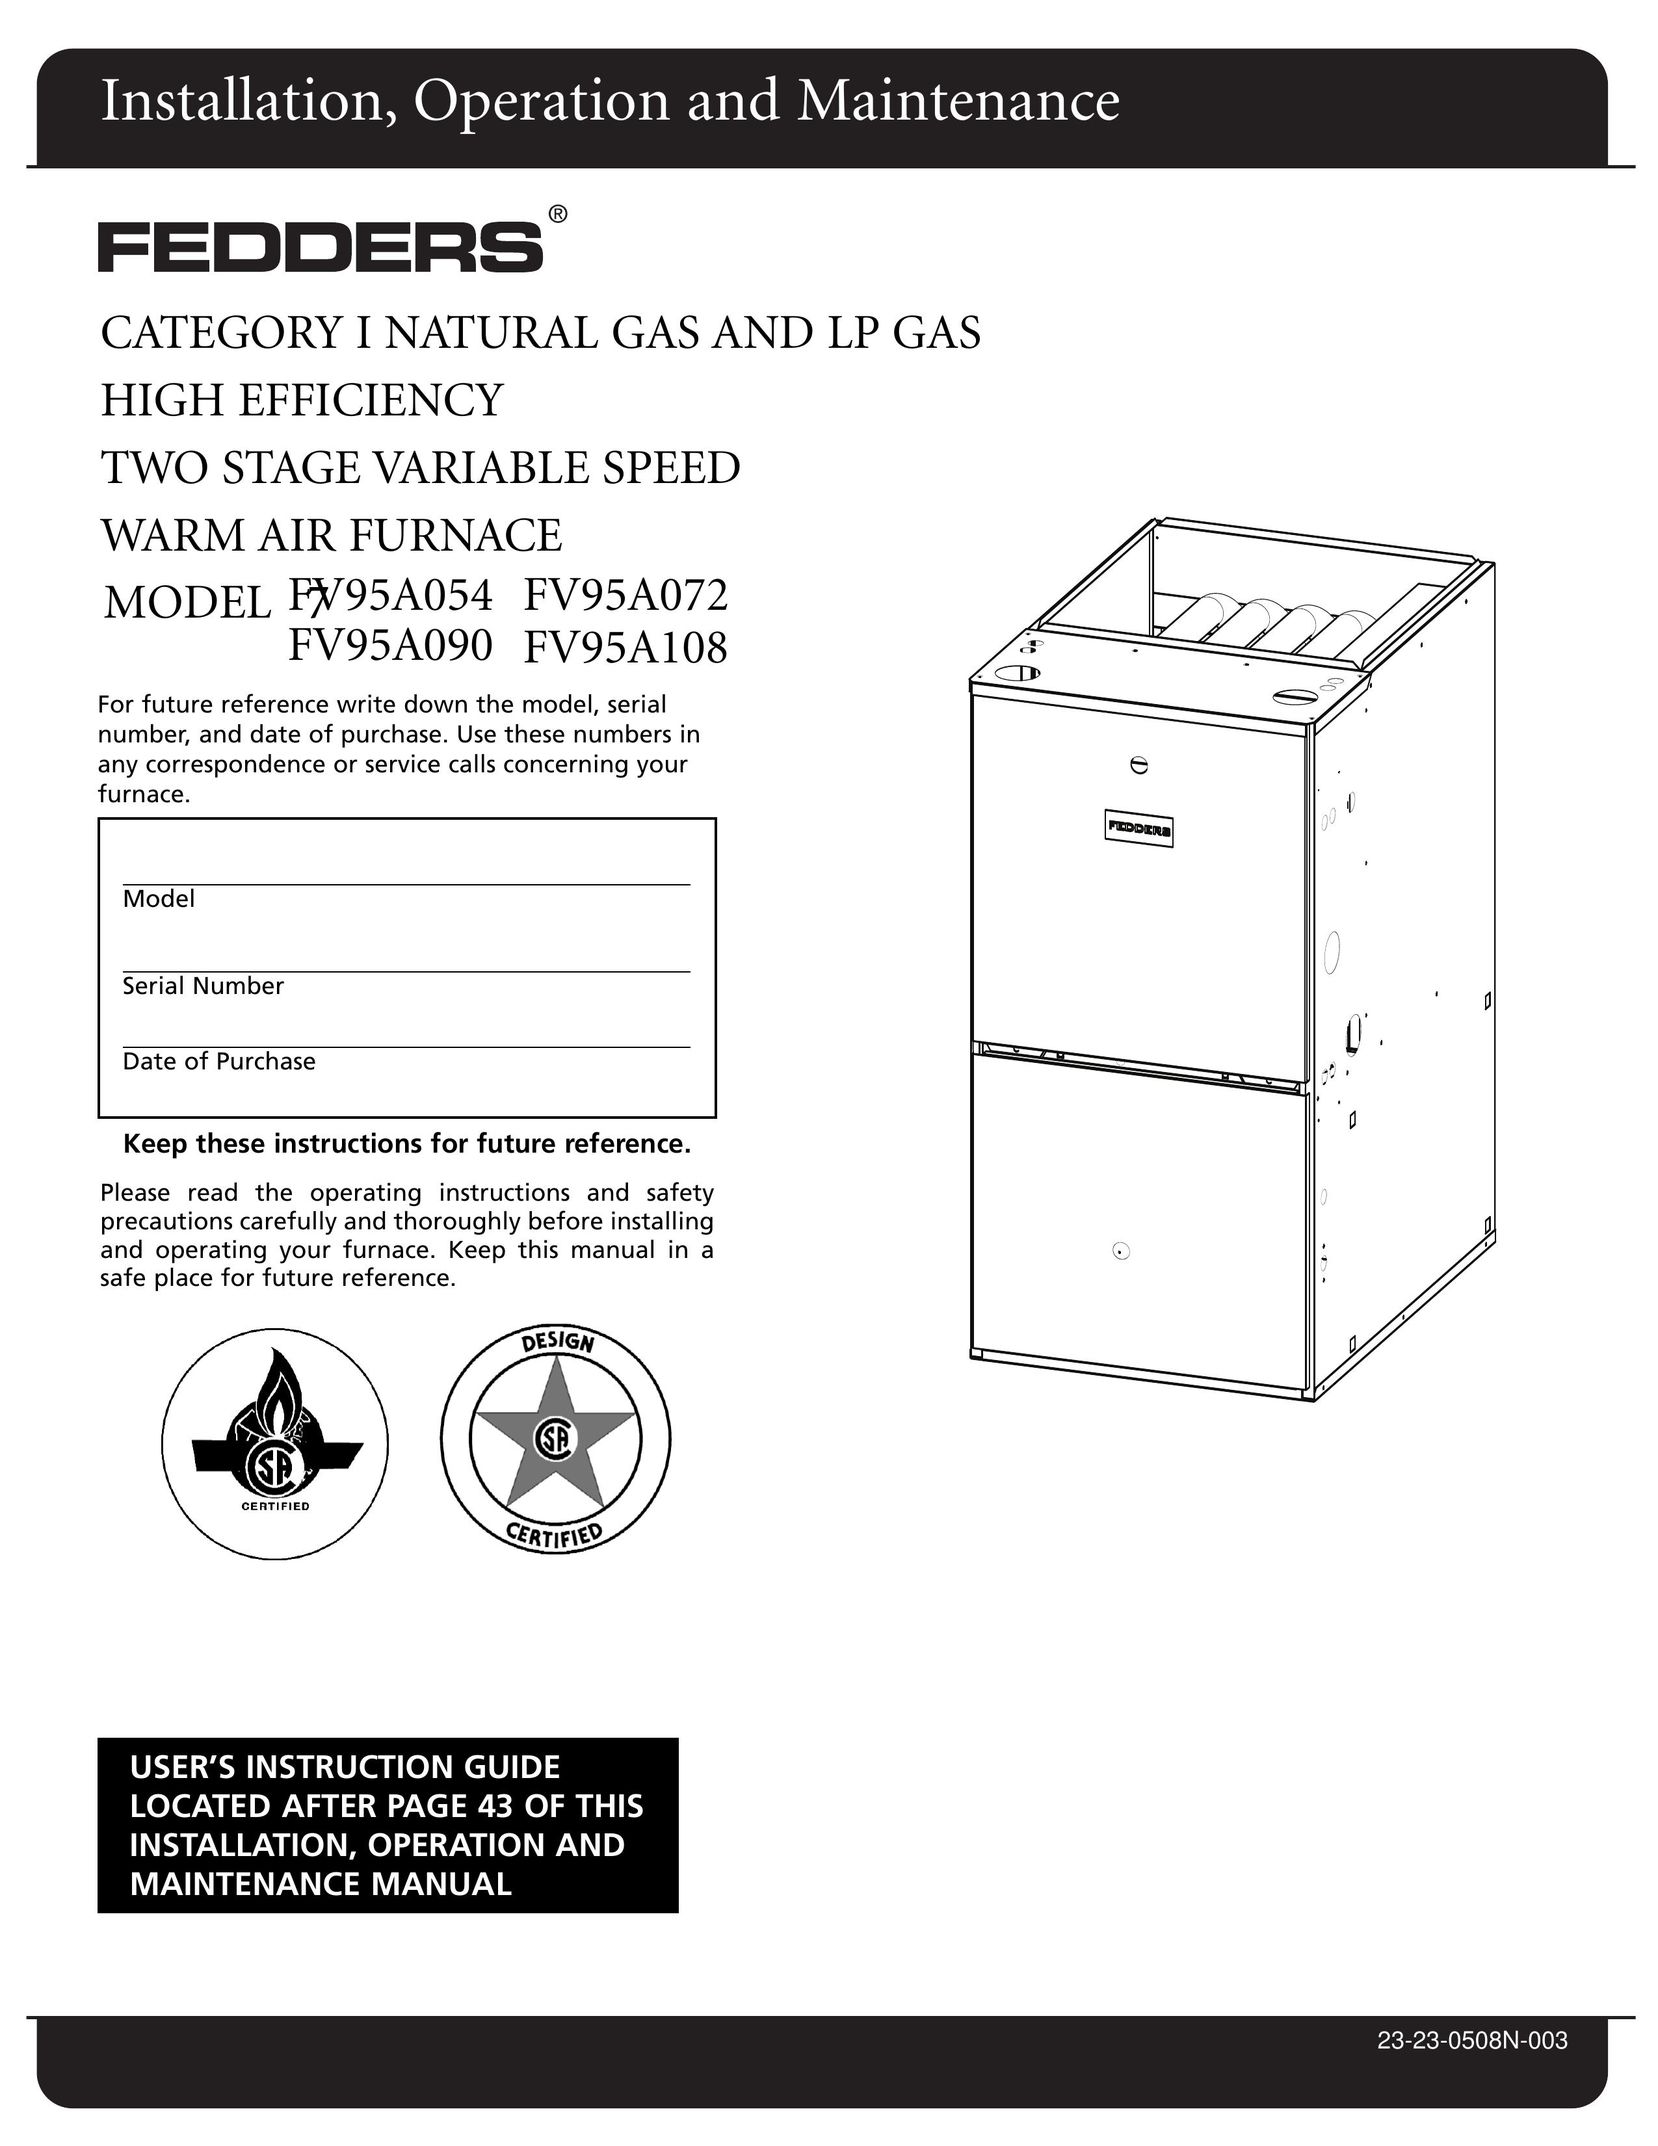 Fedders FV95A108 Freezer User Manual